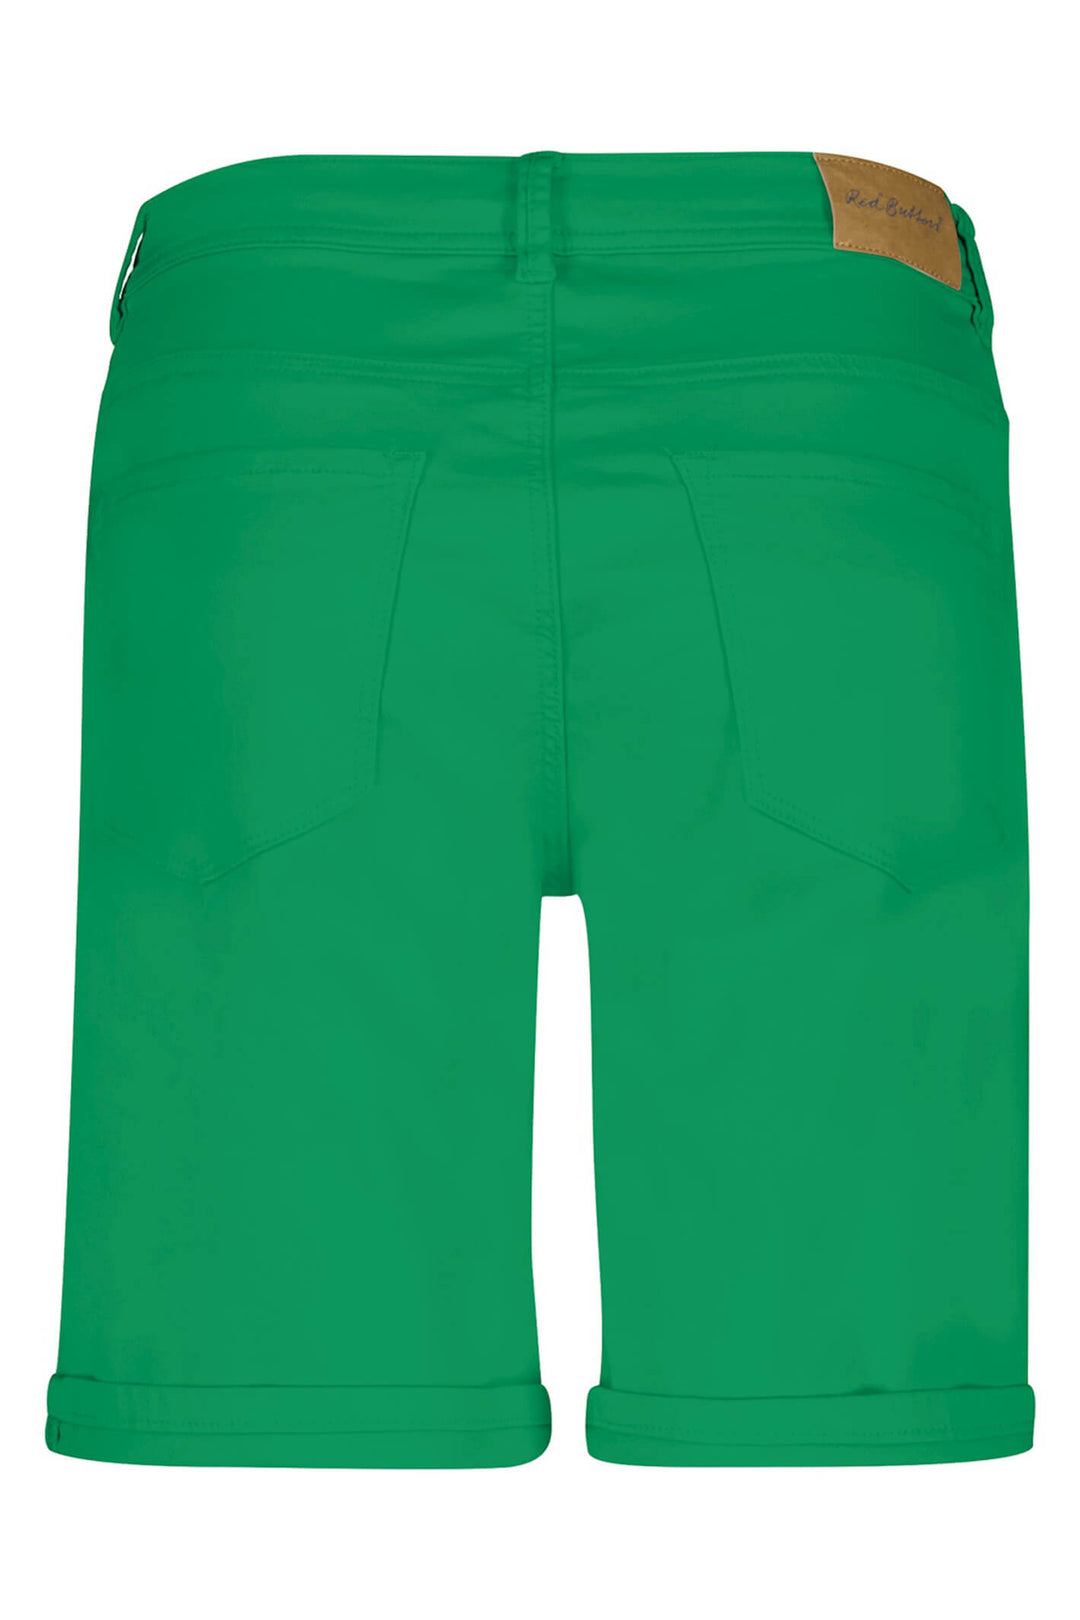 Red Button SRB3991 Relax Green Jog Shorts - Olivia Grace Fashion